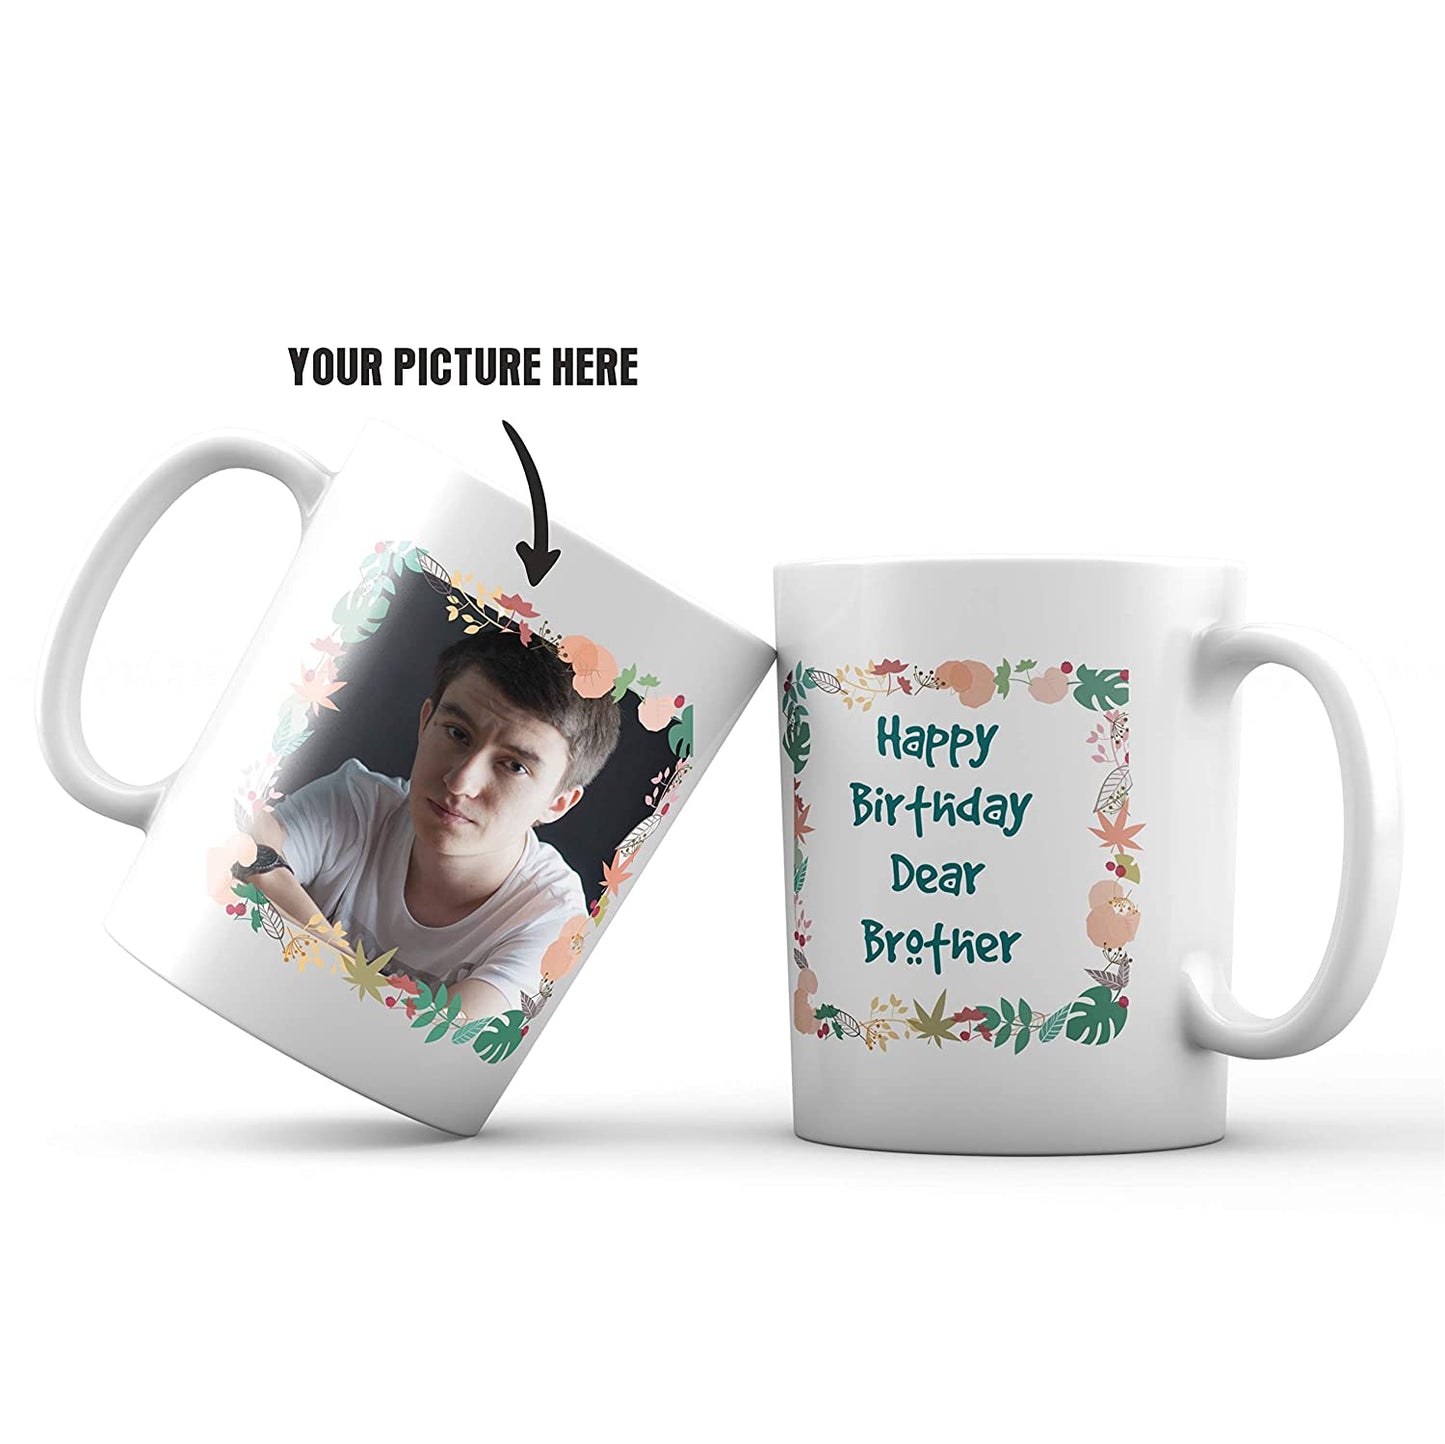 iberry's Customized/ Personalized Photo Coffee Mugs | Birthday customized photo mug| birthday gift photo mug- (70)